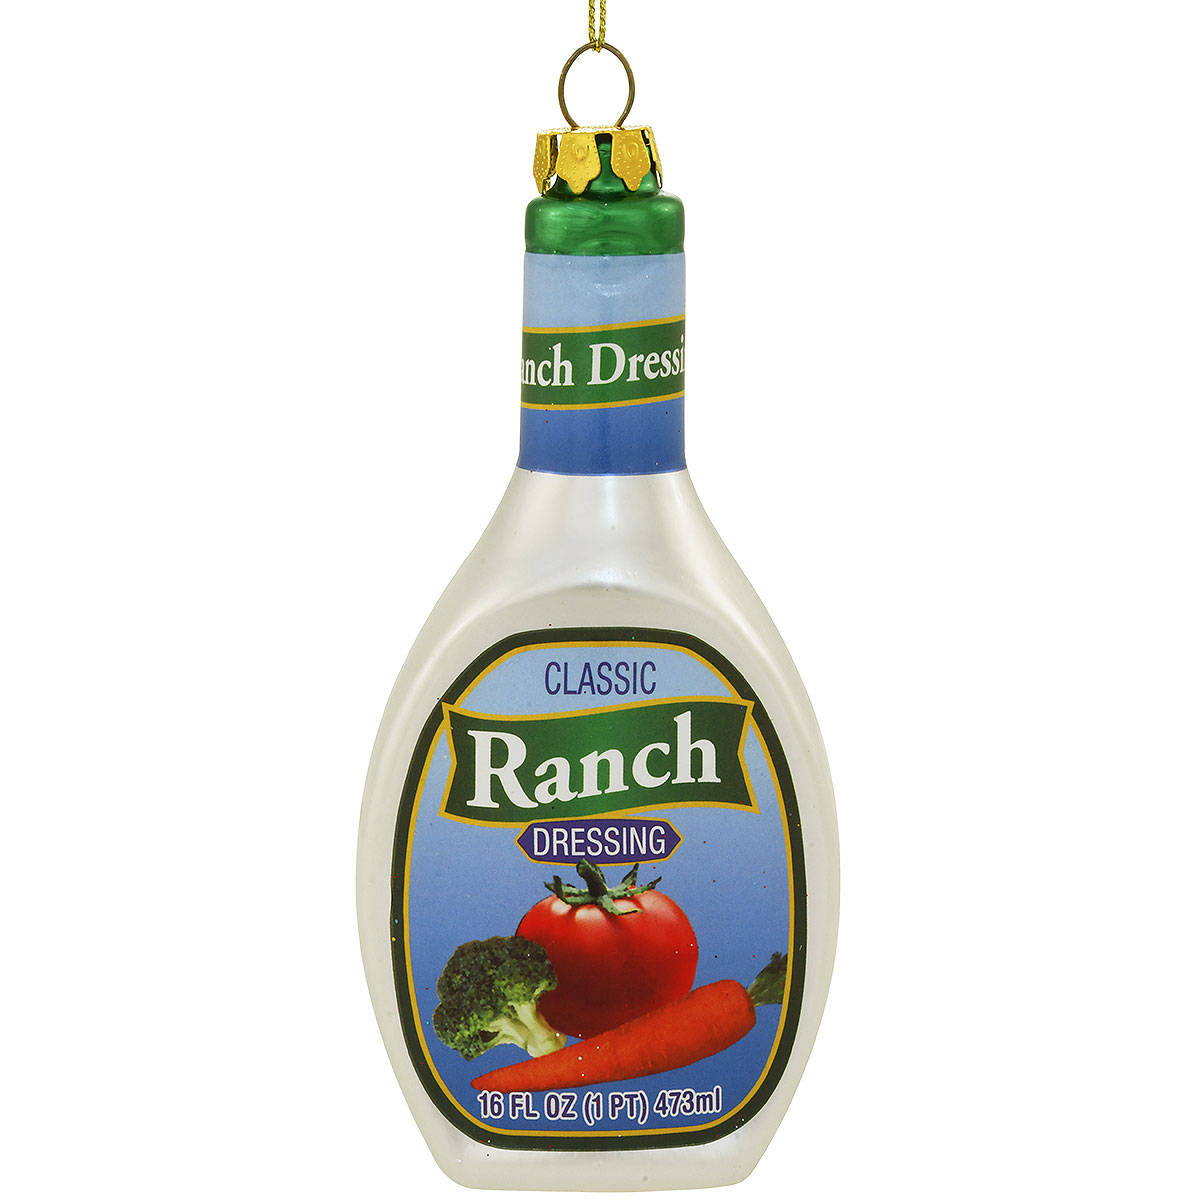 Ranch bottle glass ornament